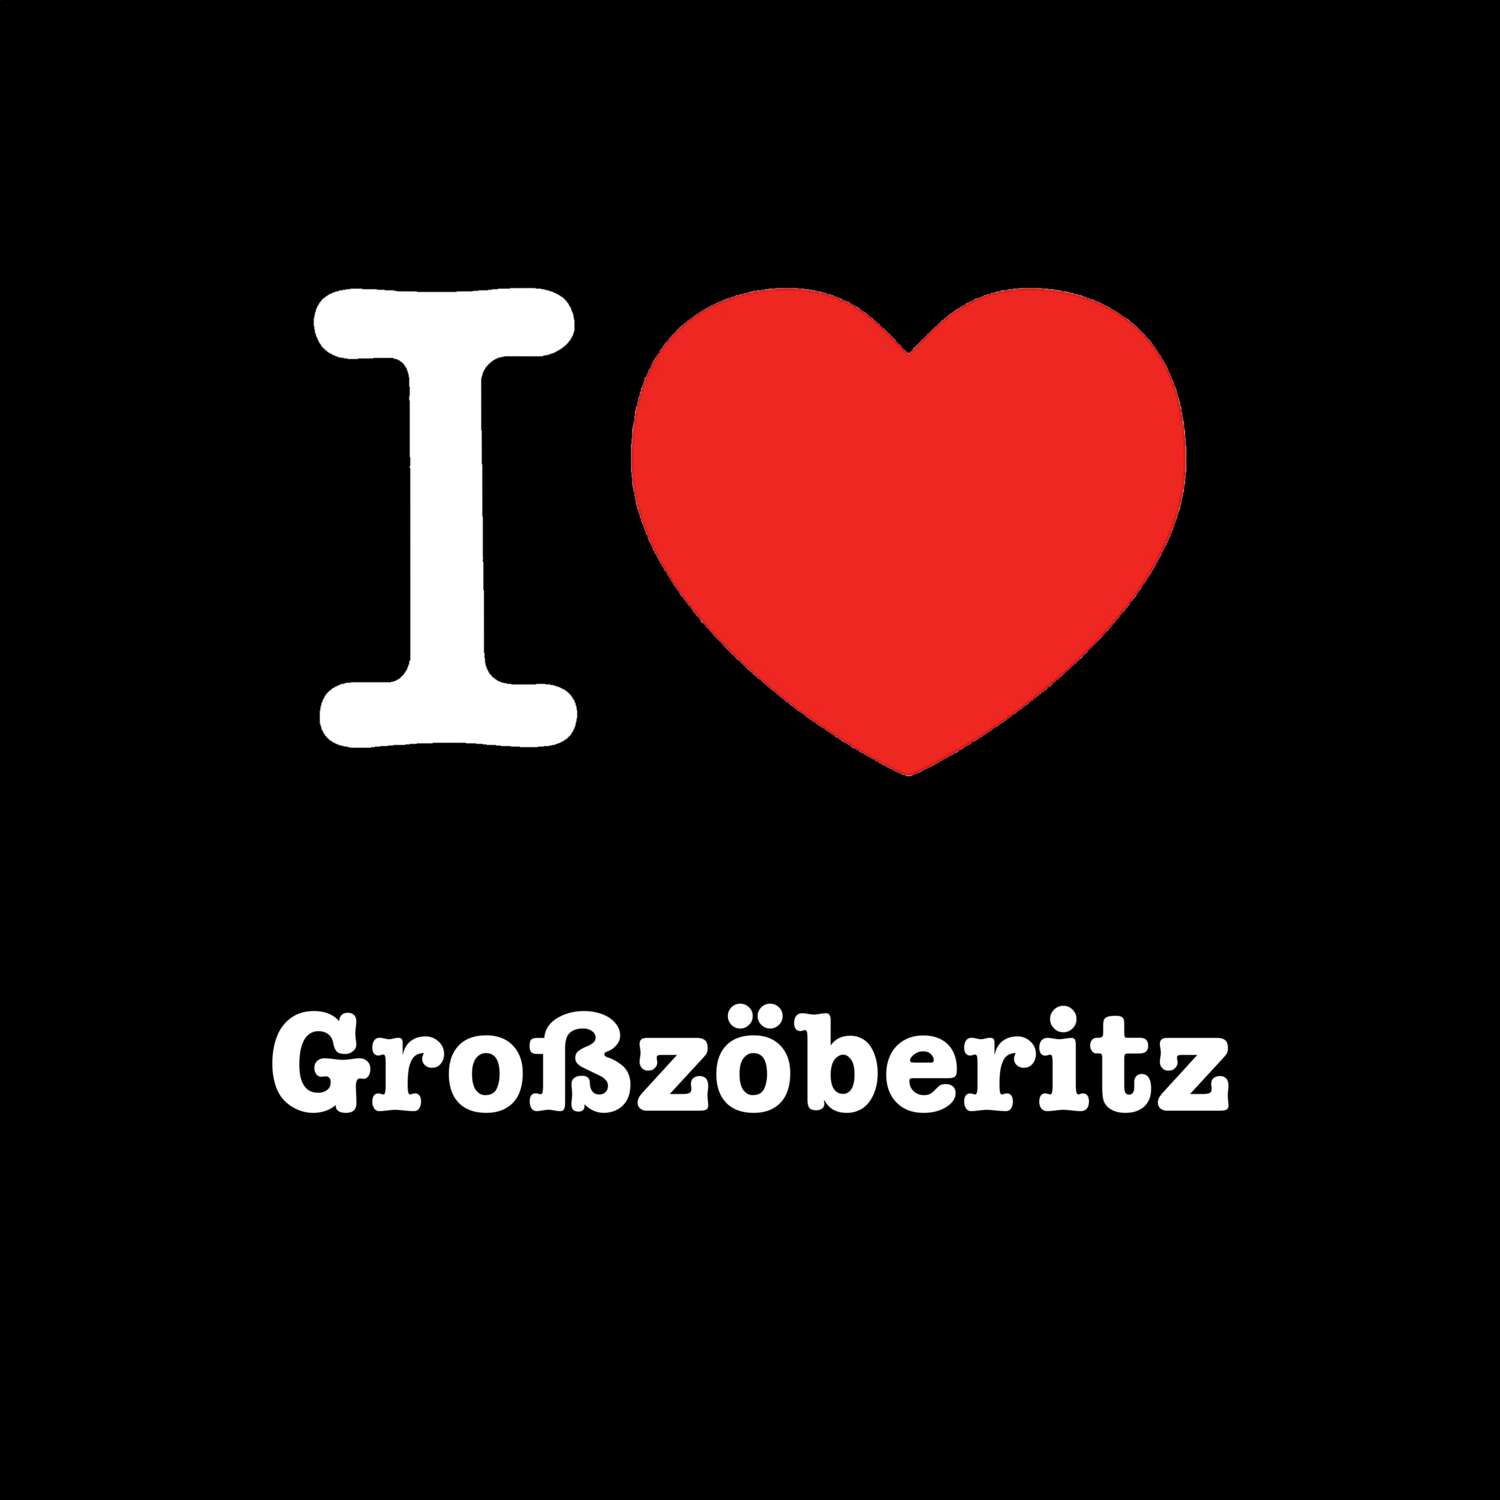 Großzöberitz T-Shirt »I love«